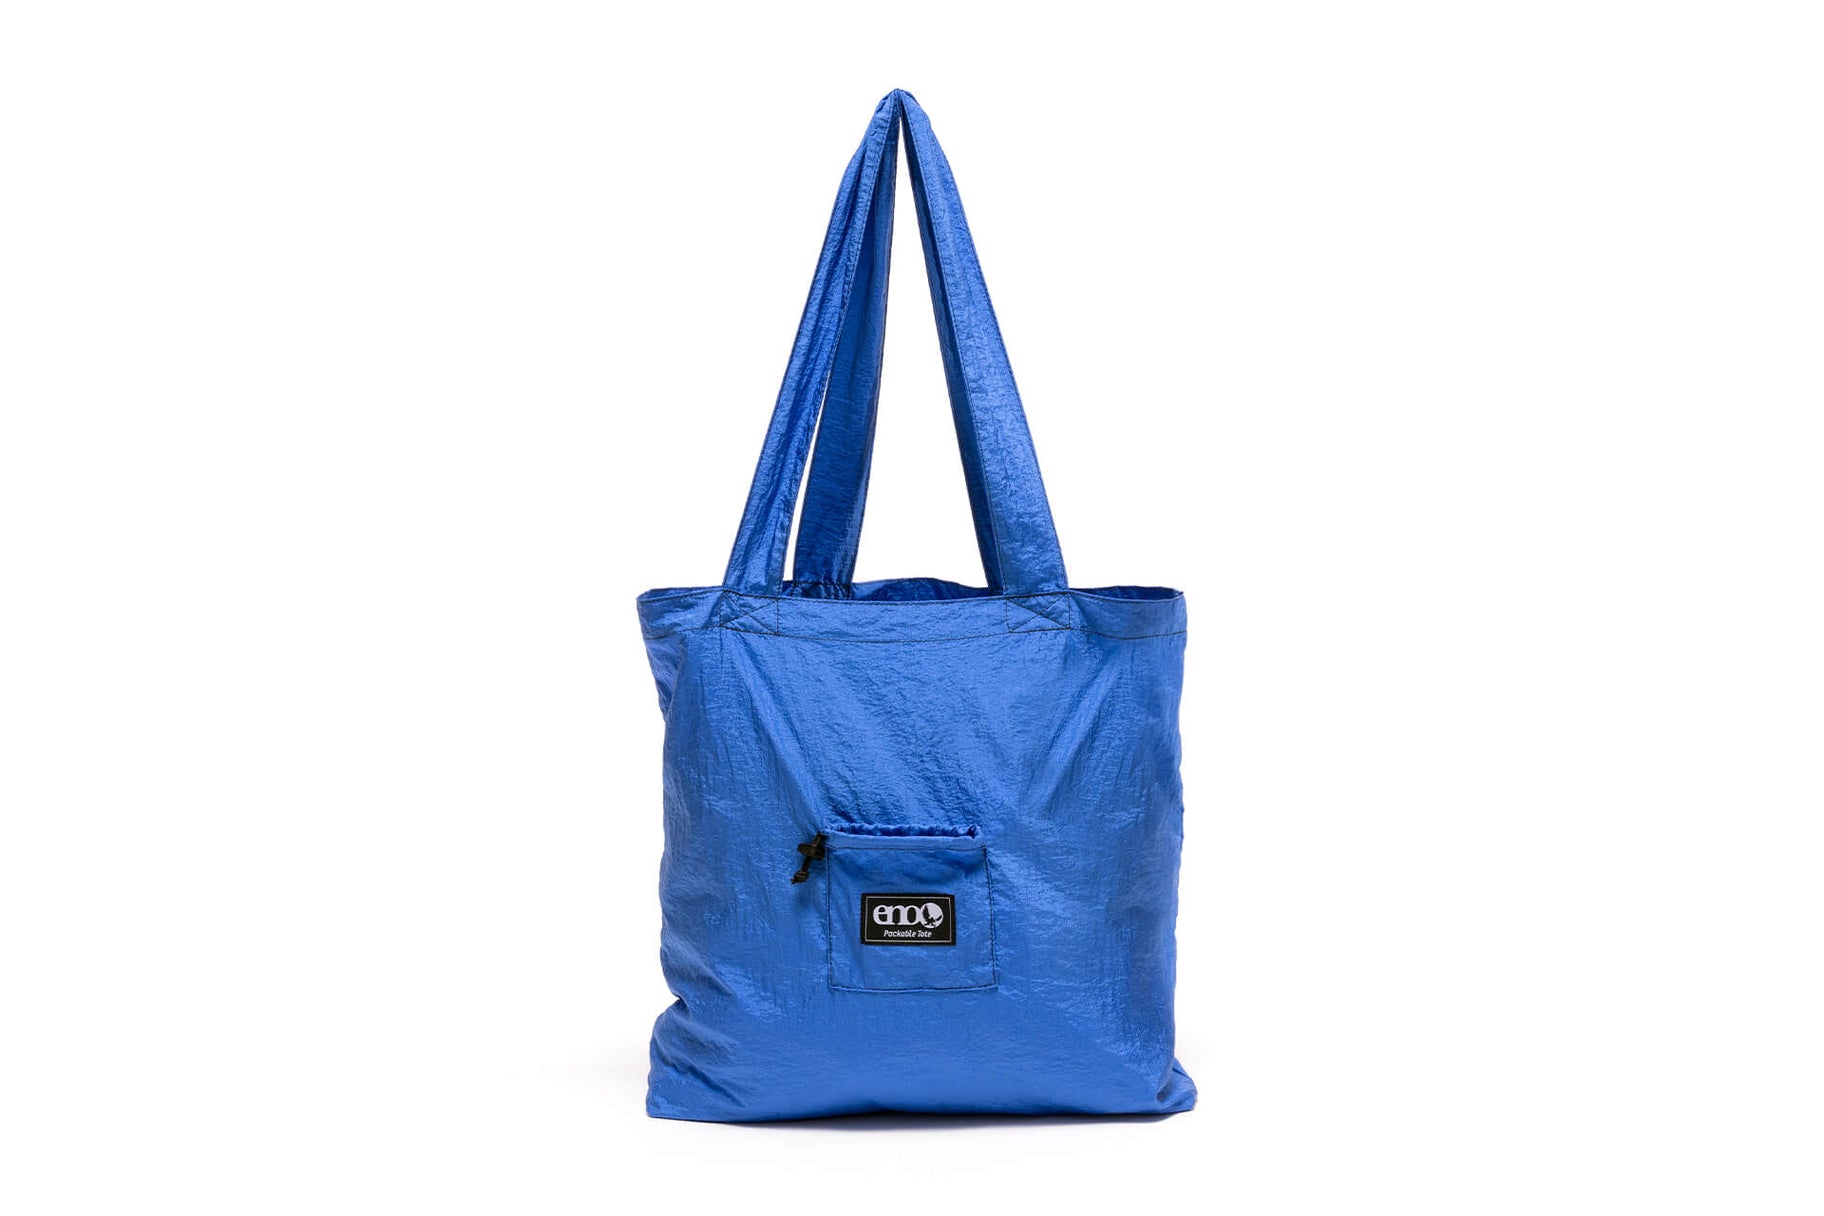 Citrus Red Blu Bag Reusable Shopping Bags - Machine Washable